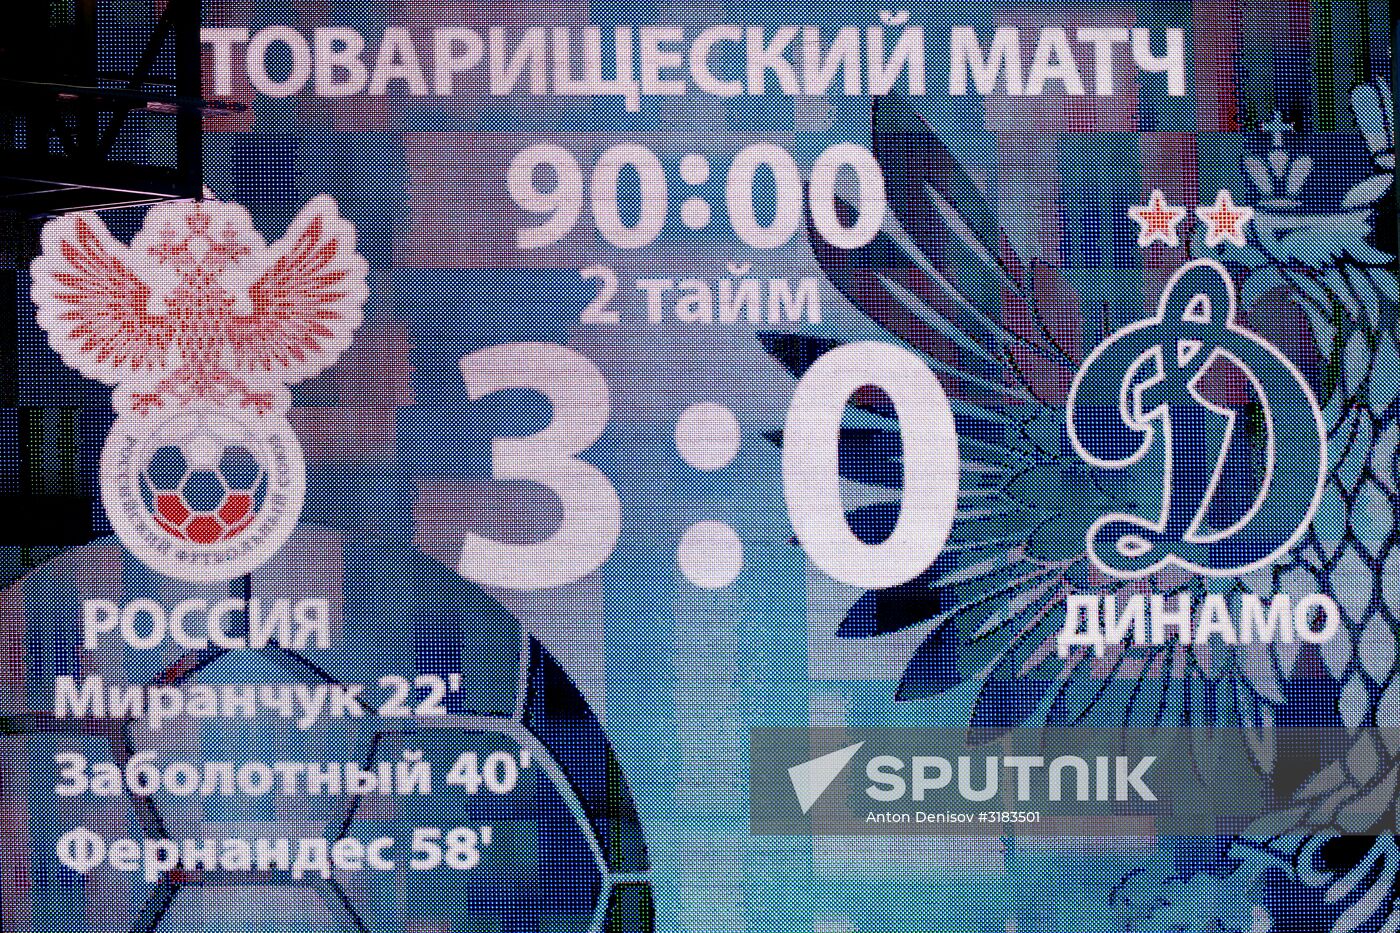 Russian national team vs. Dynamo Moscow friendly football match